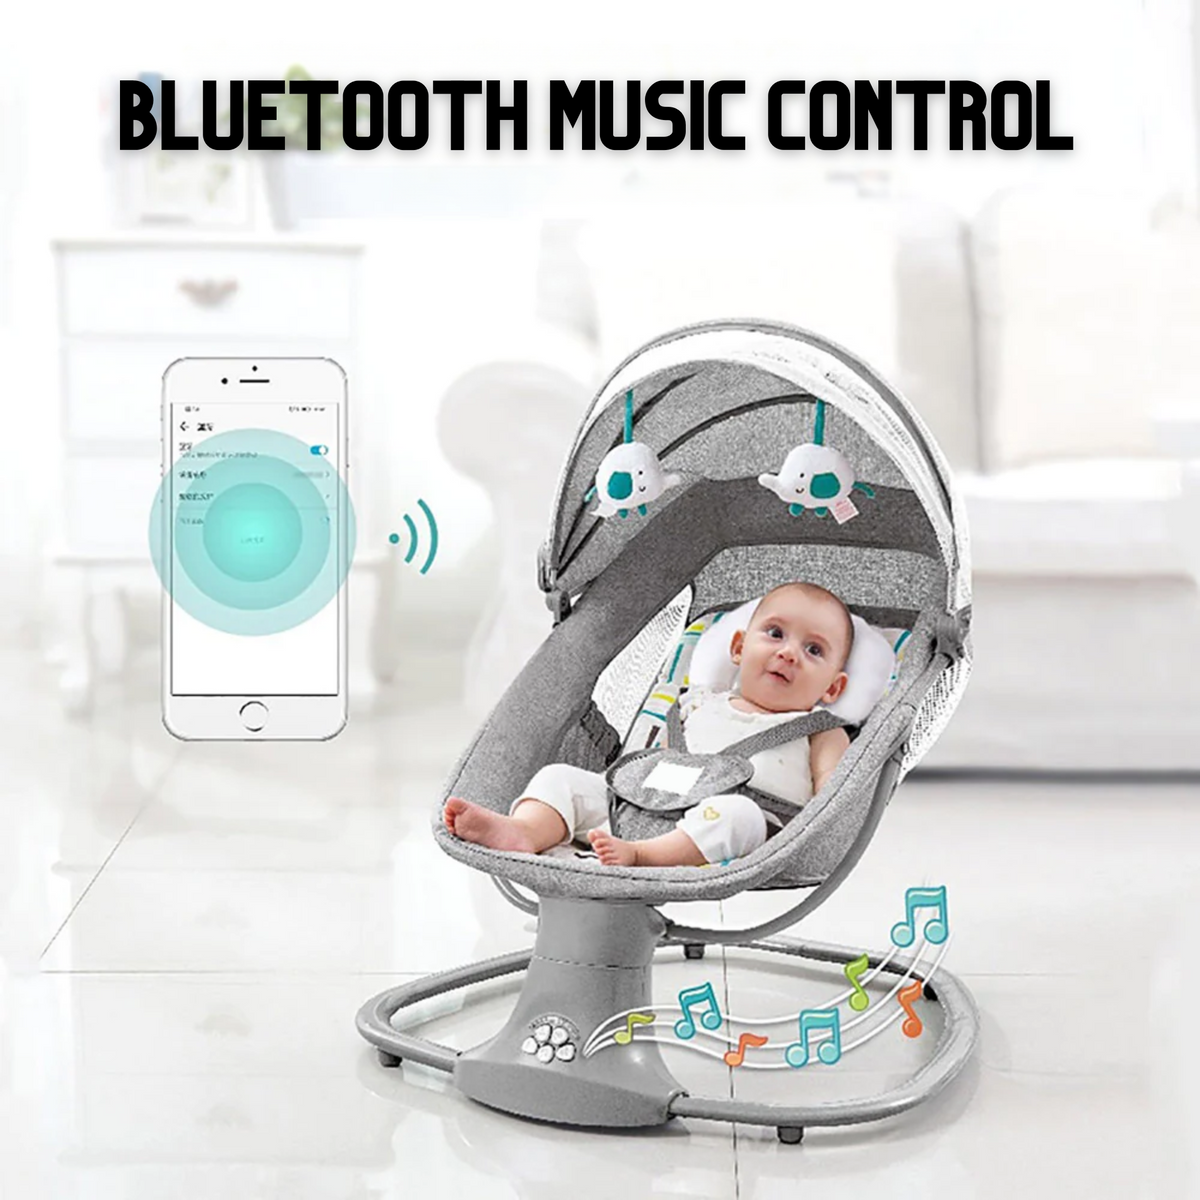 Bluetooth music control